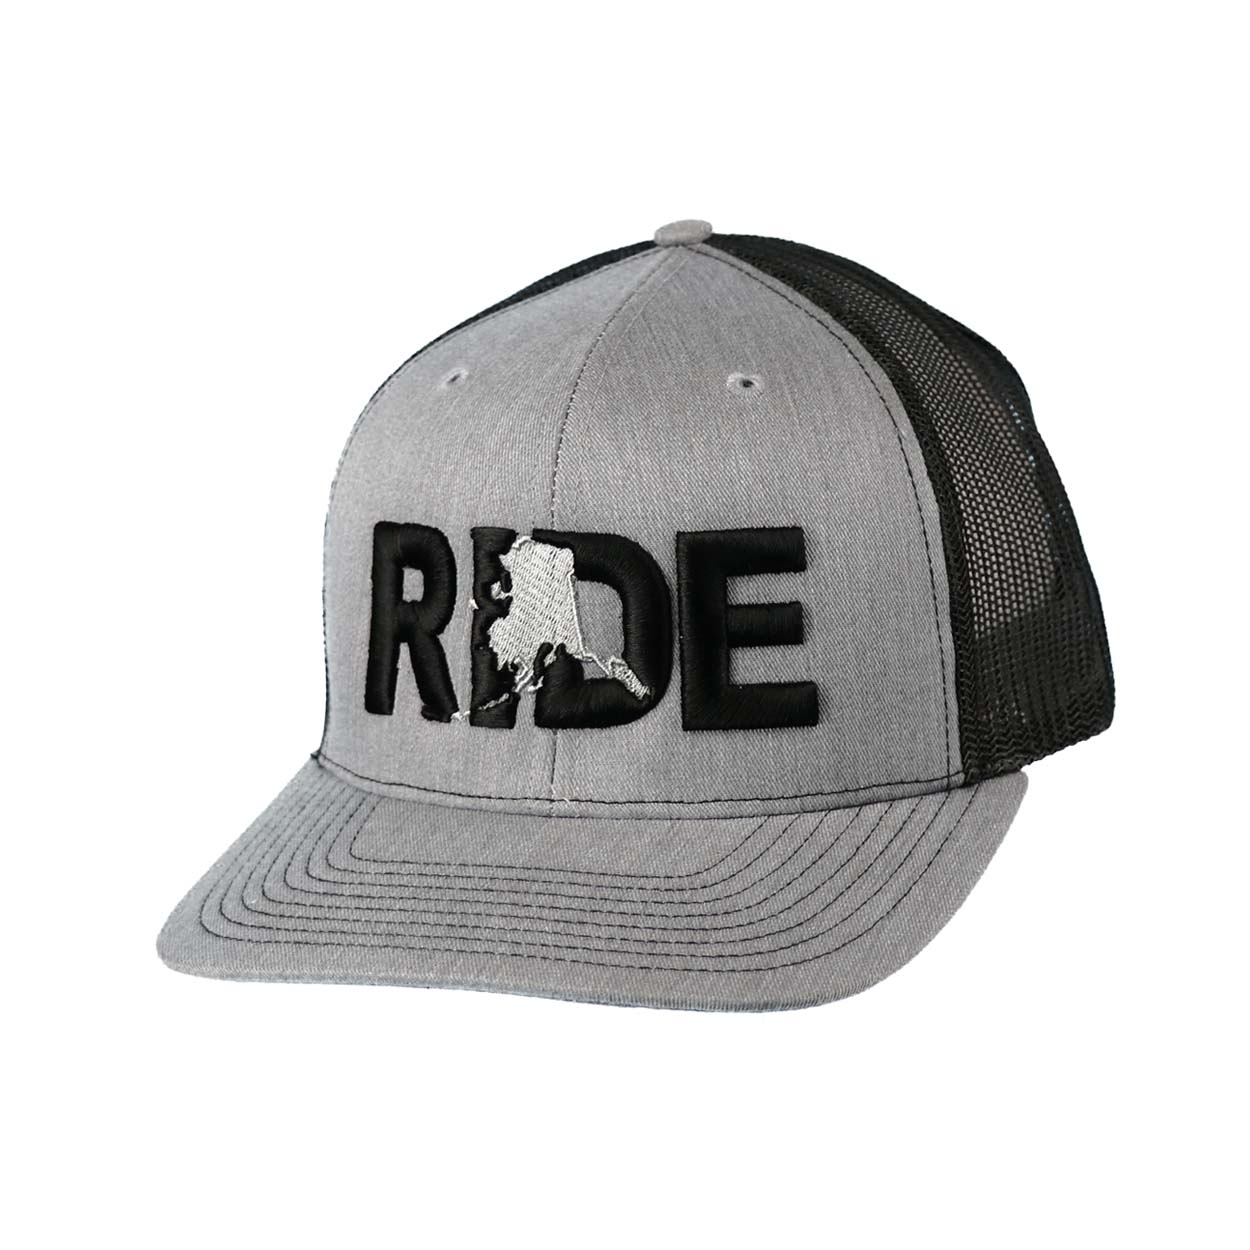 Ride Alaska Classic Embroidered Snapback Trucker Hat Heather Gray/Black